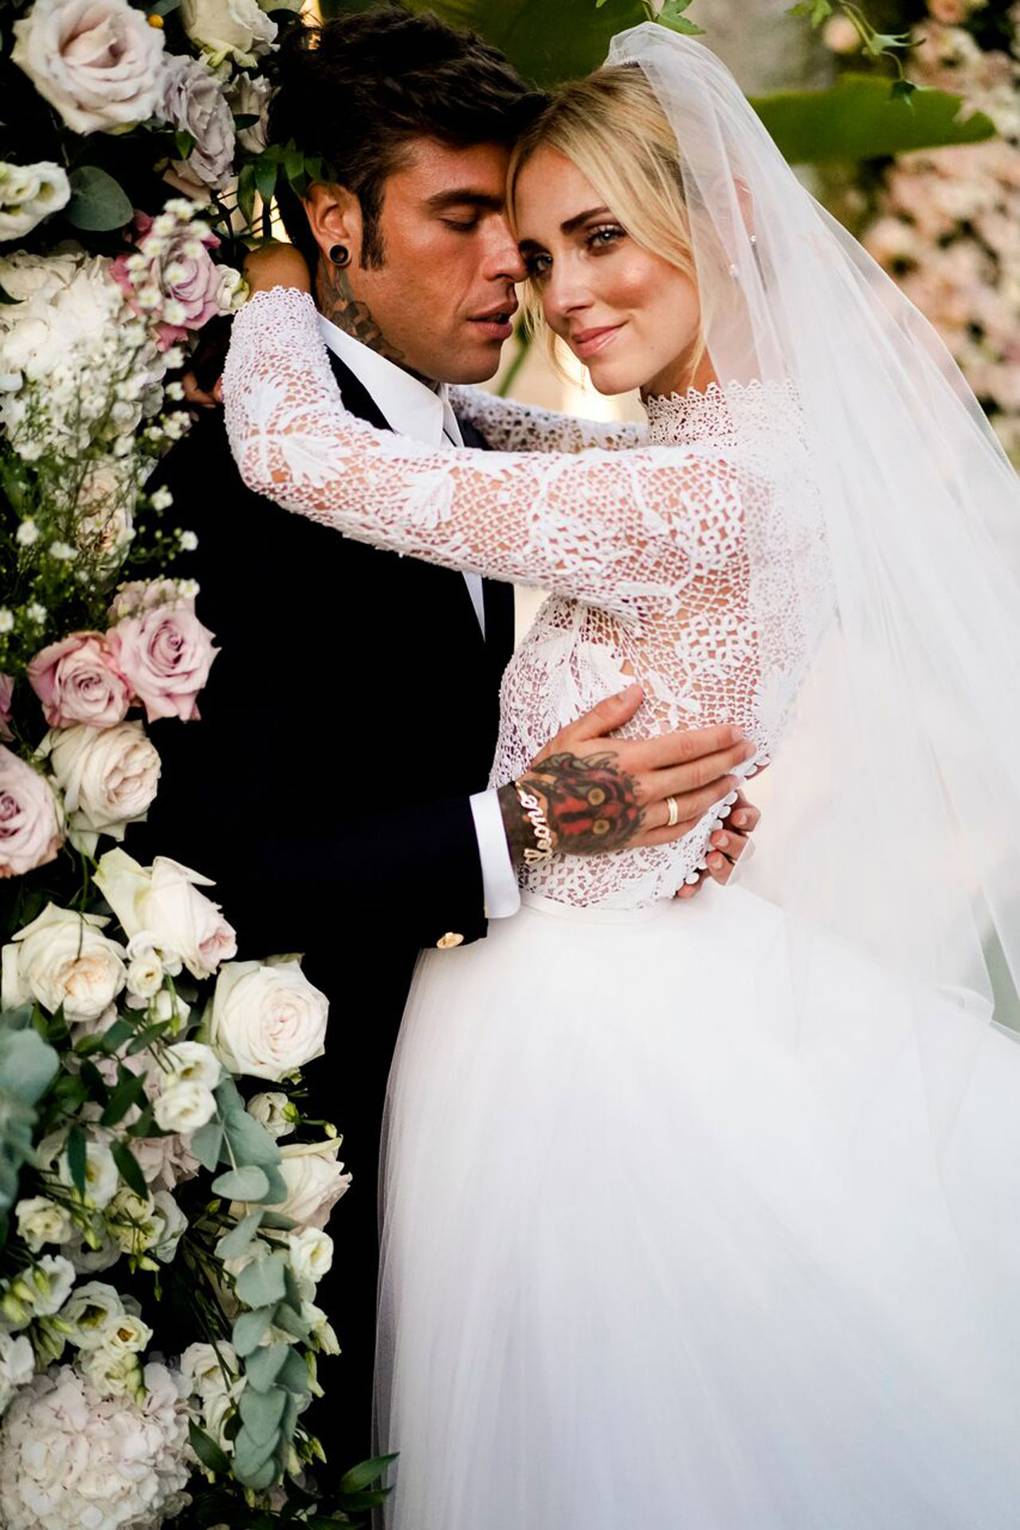 #CelebrityWeddings: Chiara Ferragni's Wedding Look Revealed